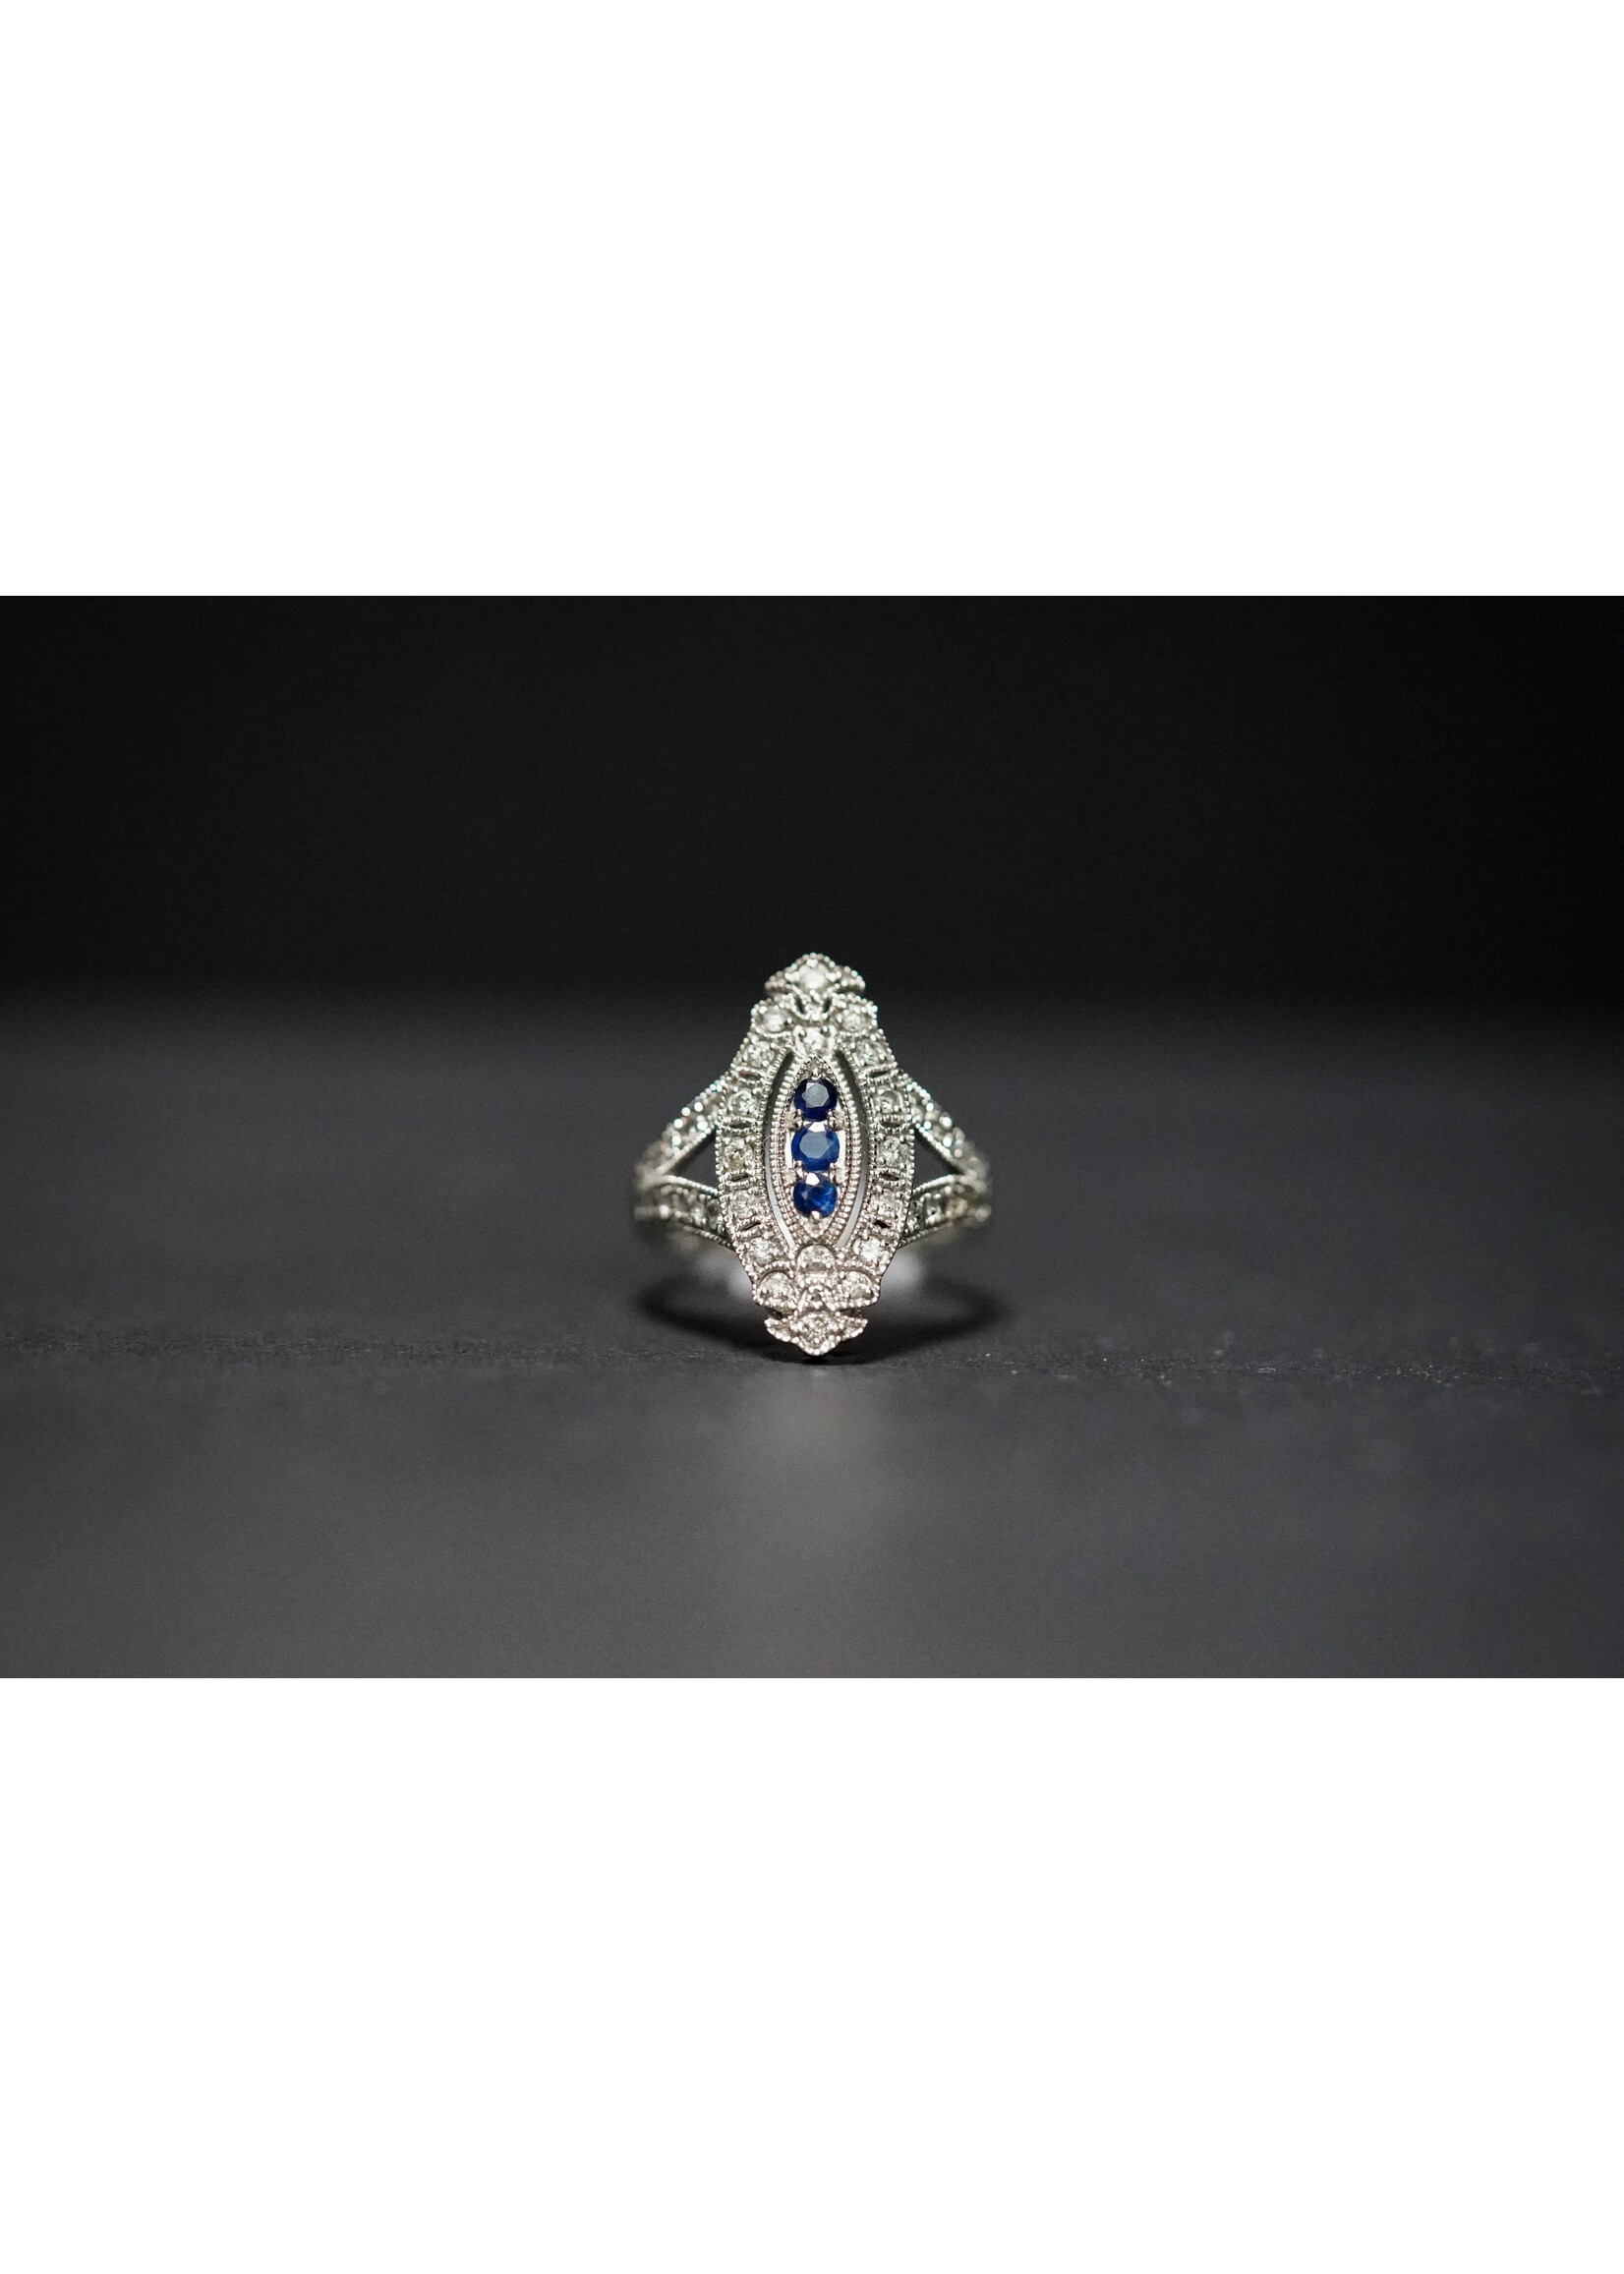 14KW 4.0g .84ctw Sapphire & Diamond Vintage Inspired Ring (size 7)